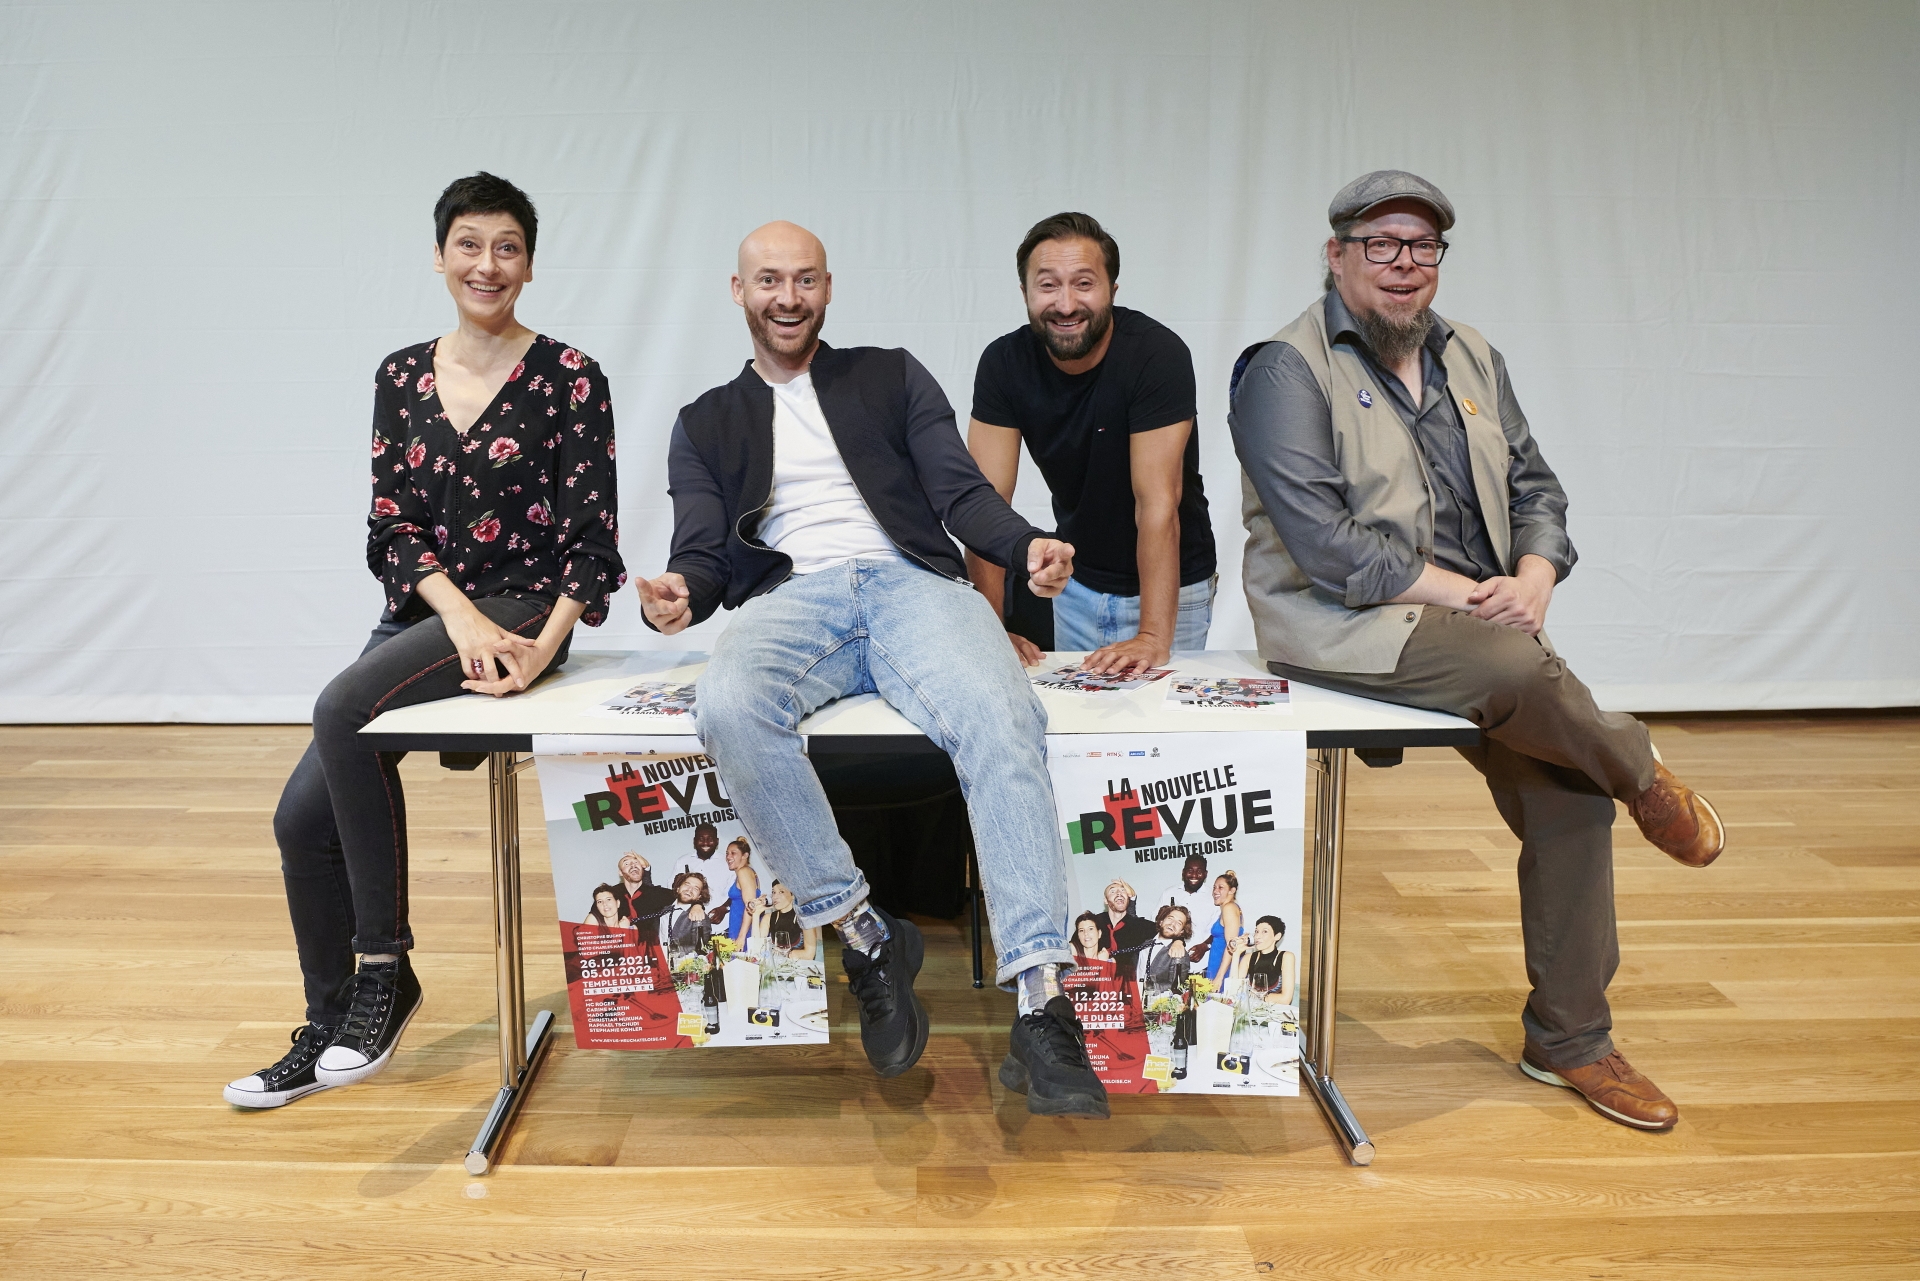 De gauche à droite: Mado Sierro, David Charles Haeberli (alias MC Roger), Avni Krasniqi et Matthieu Béguelin ce mercredi 15 septembre à Neuchâtel.